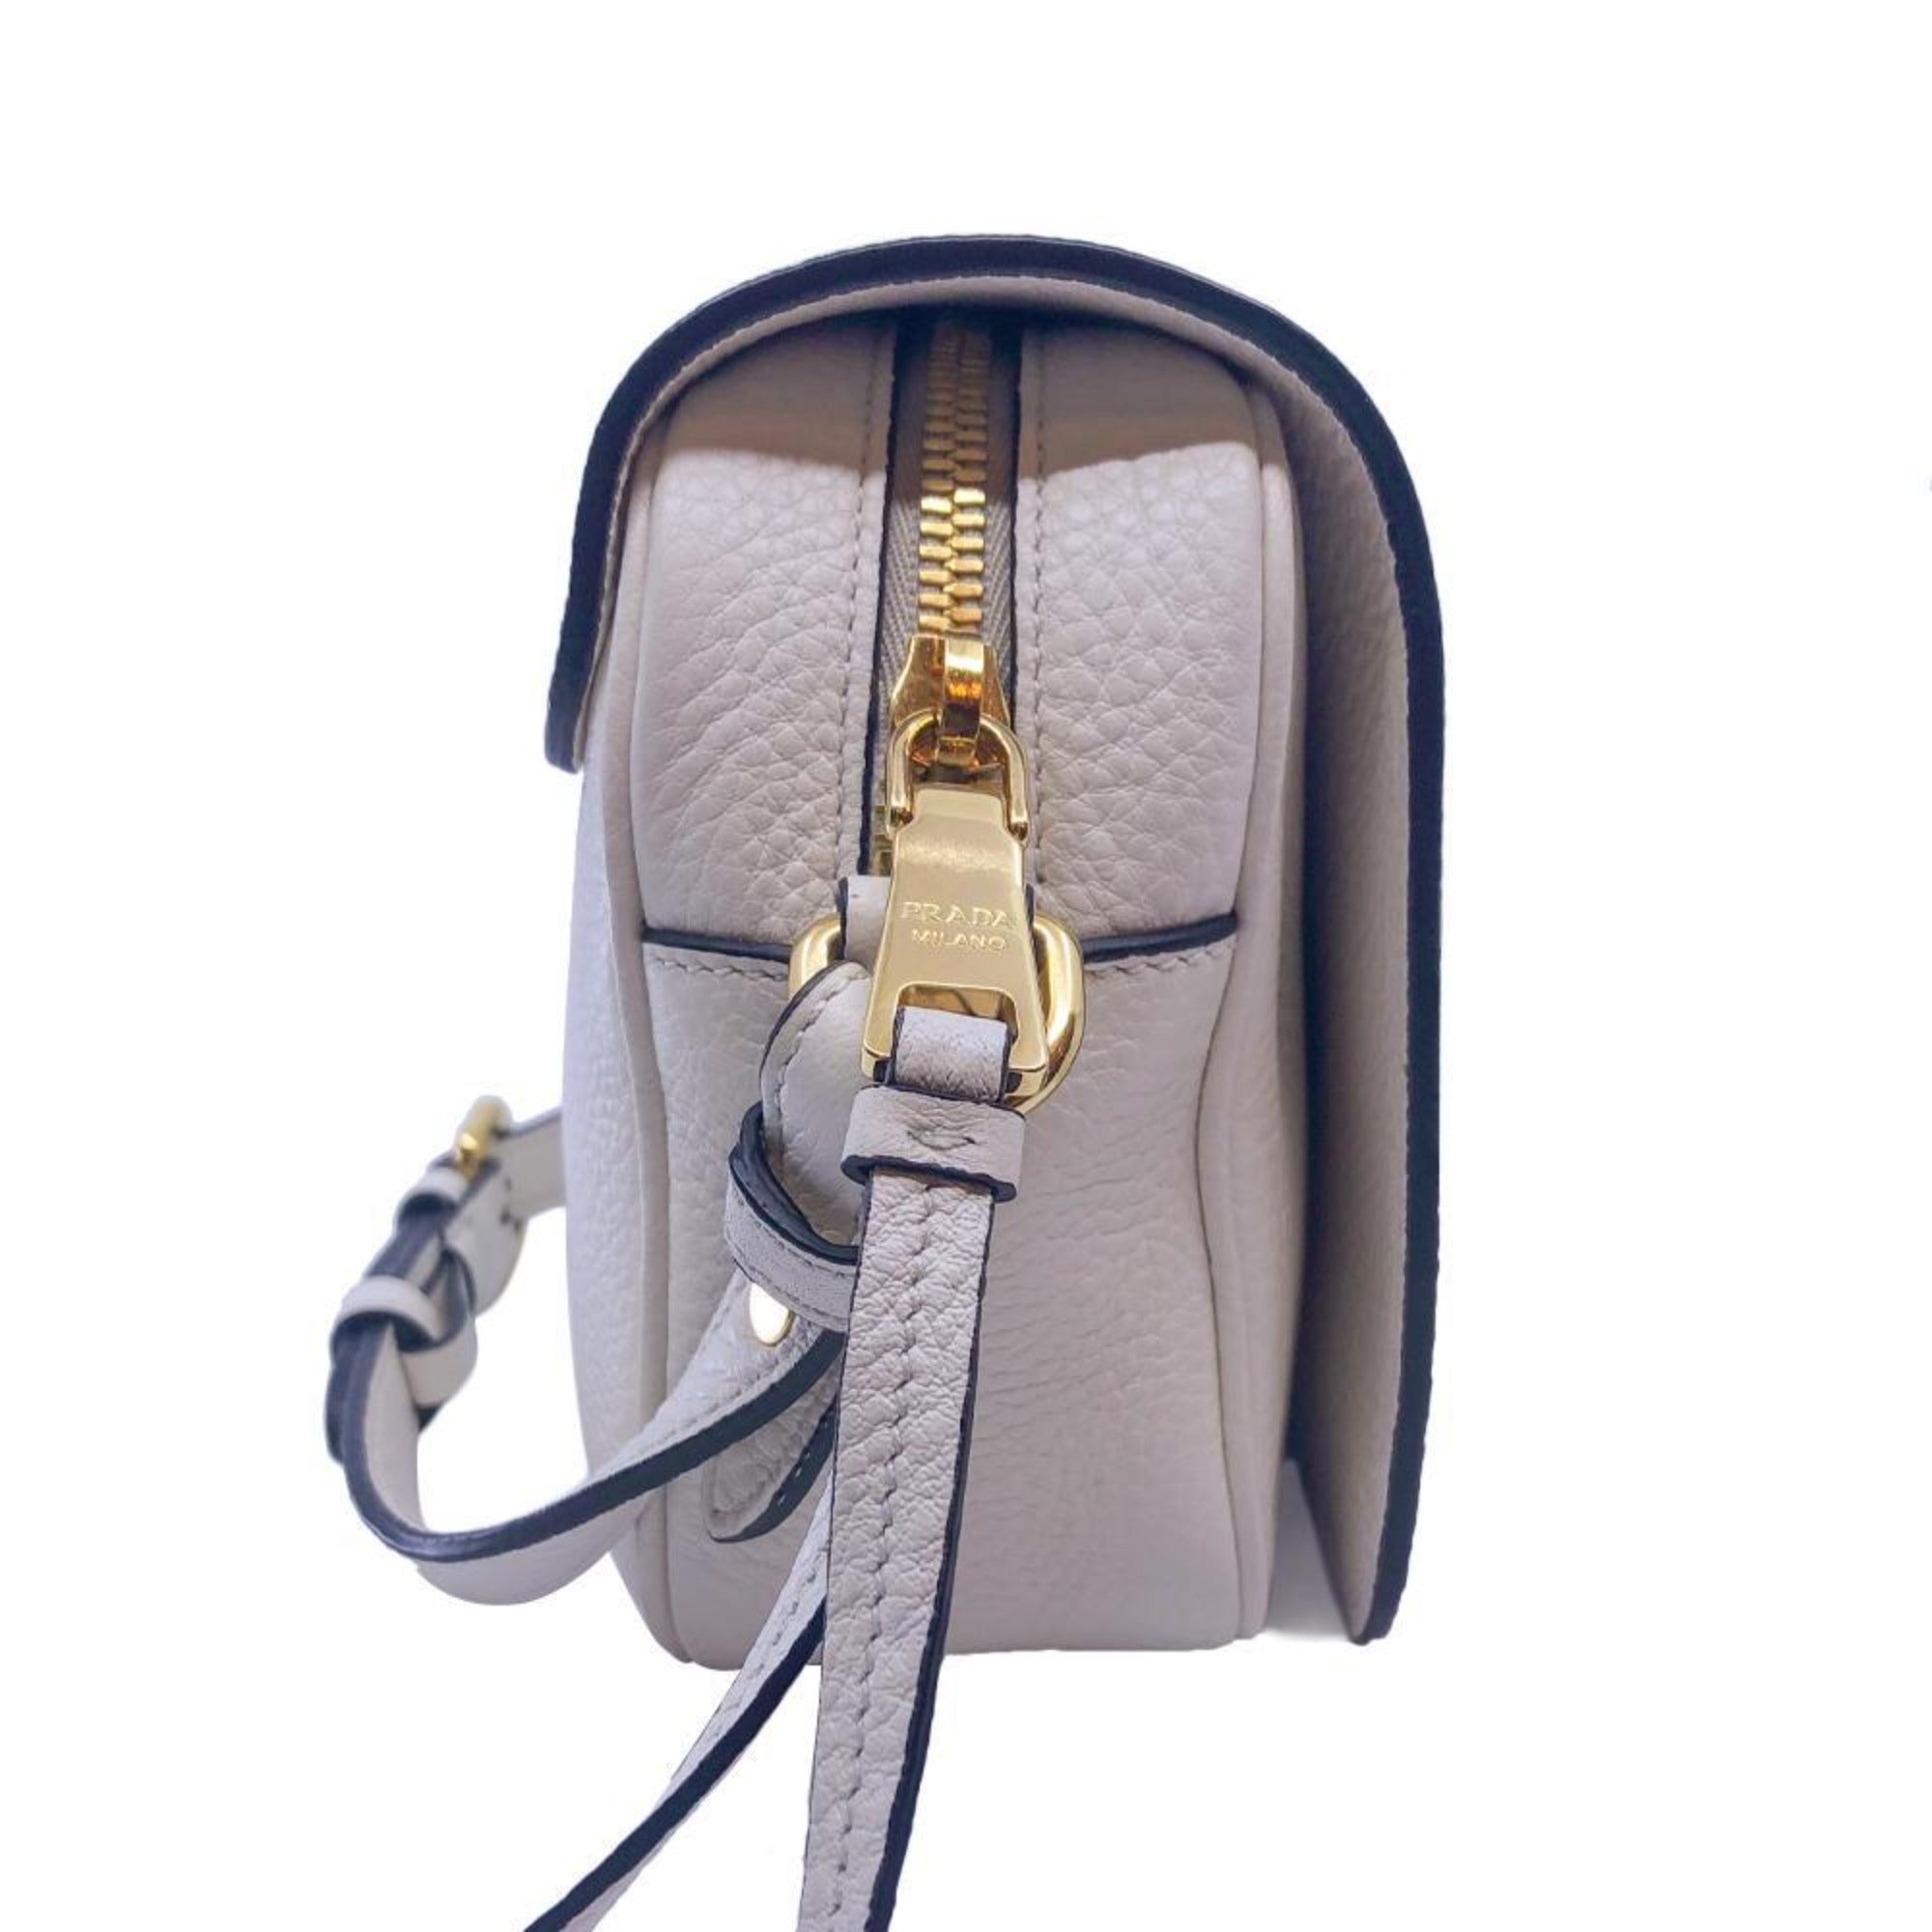 Prada Women's Flap Vitello Phenix Ivory Leather Crossbody Bag 1BD163 at_Queen_Bee_of_Beverly_Hills